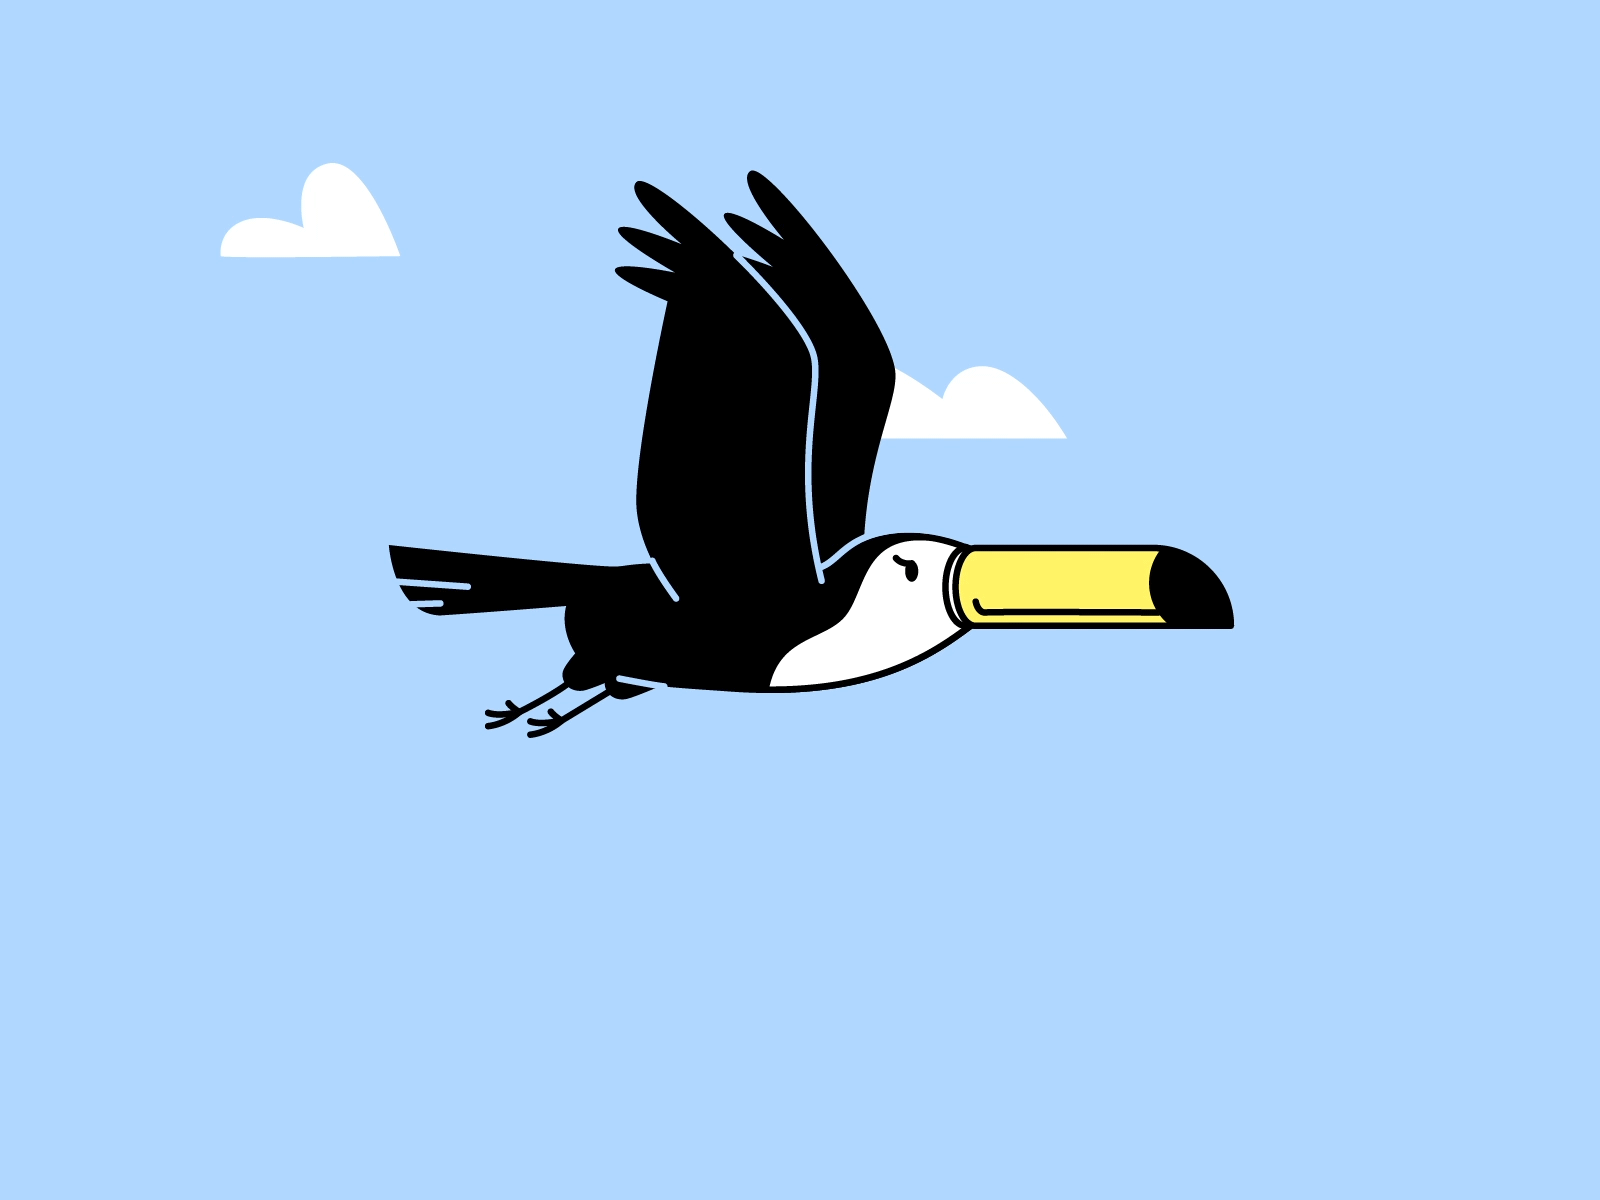 Toucan flying 2danimation animal app bird character flying bird frame by frame animation toucan vector